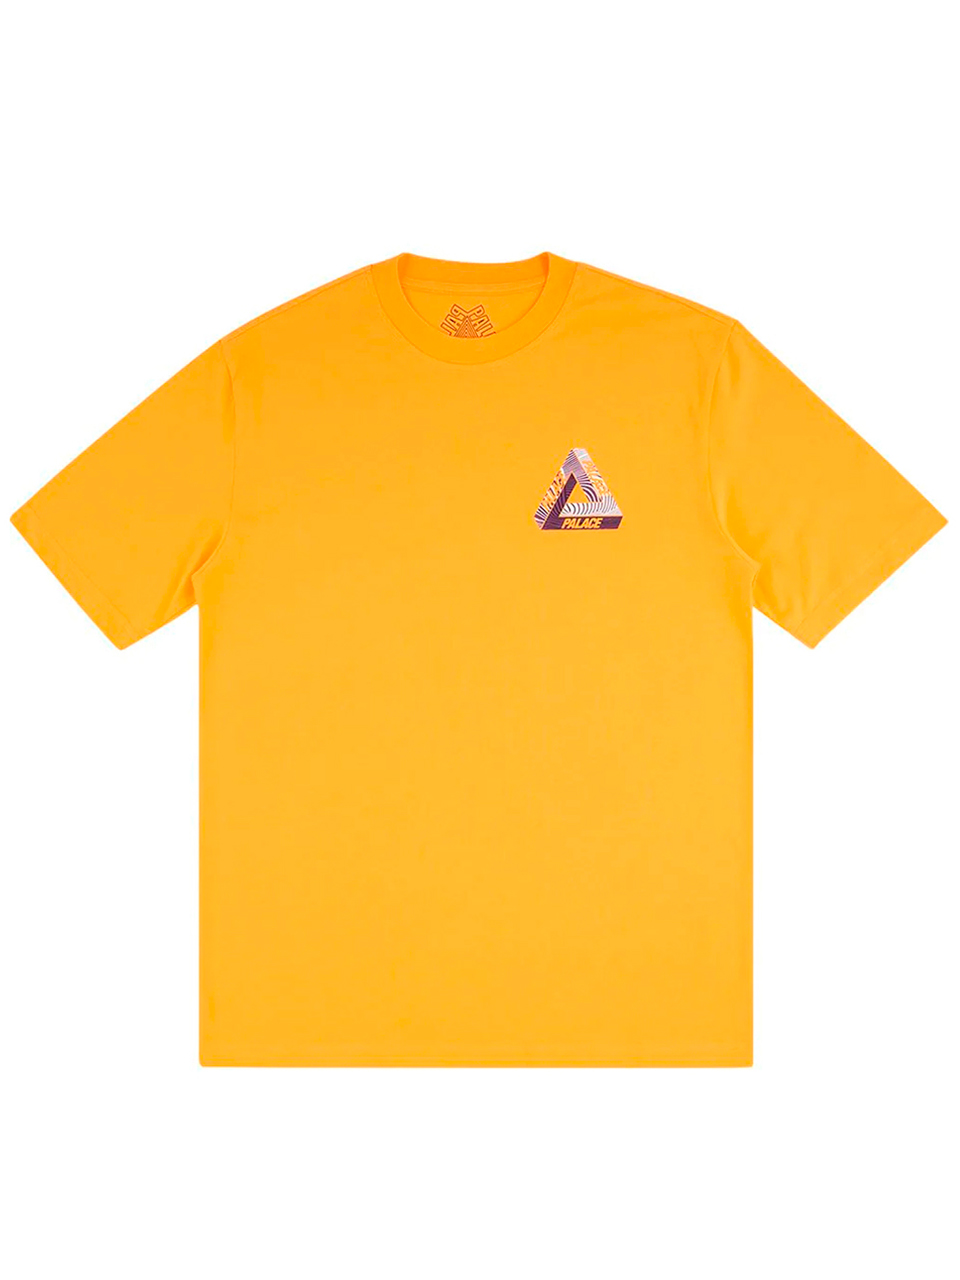 Imagem de: Camiseta Palace Amarela Tri-Tex